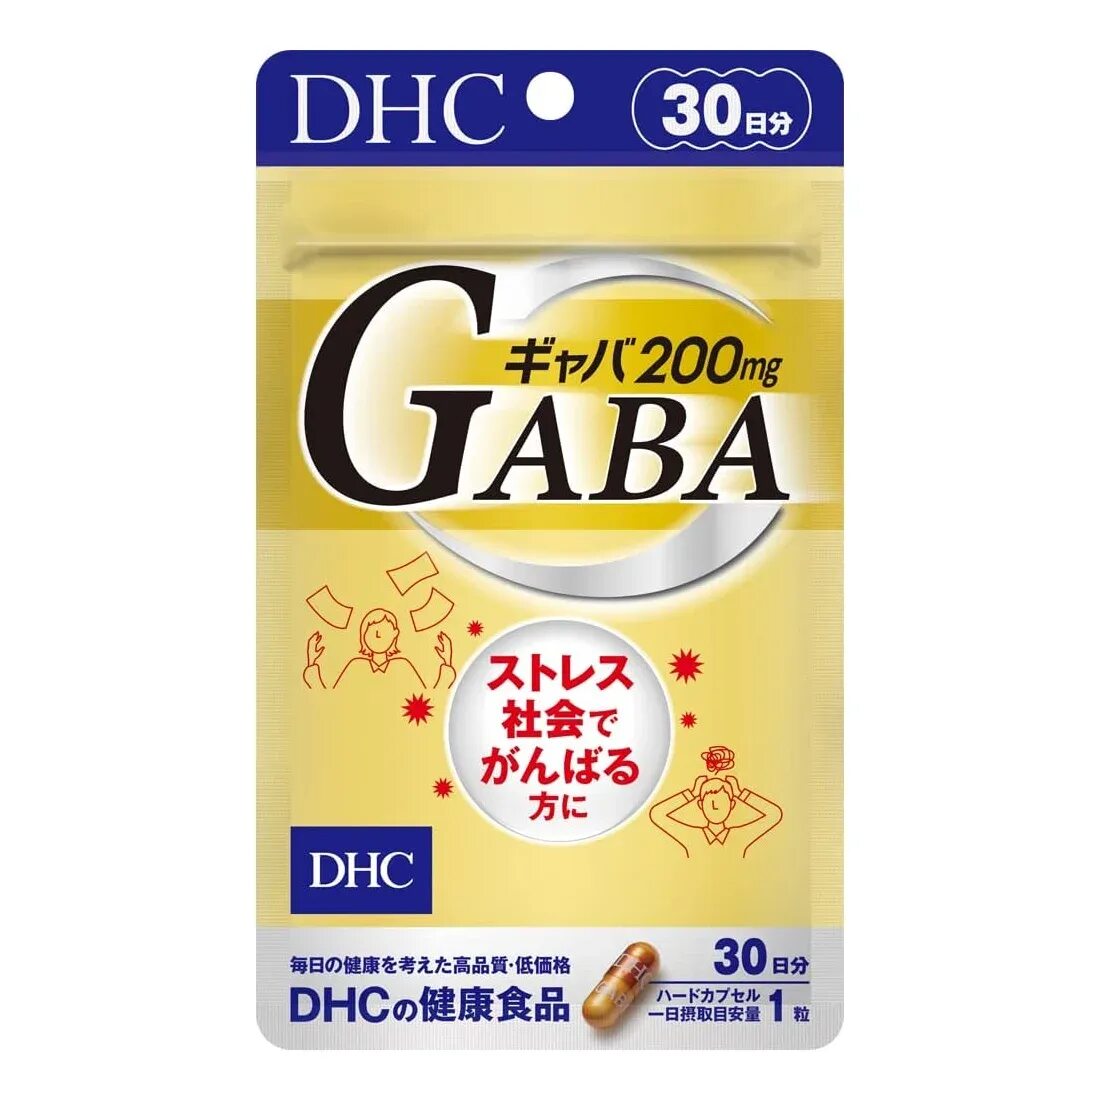 DHC Gaba 30 дн. DHC БАД Япония. Японские витамины DHC. Gaba 500 Япония.